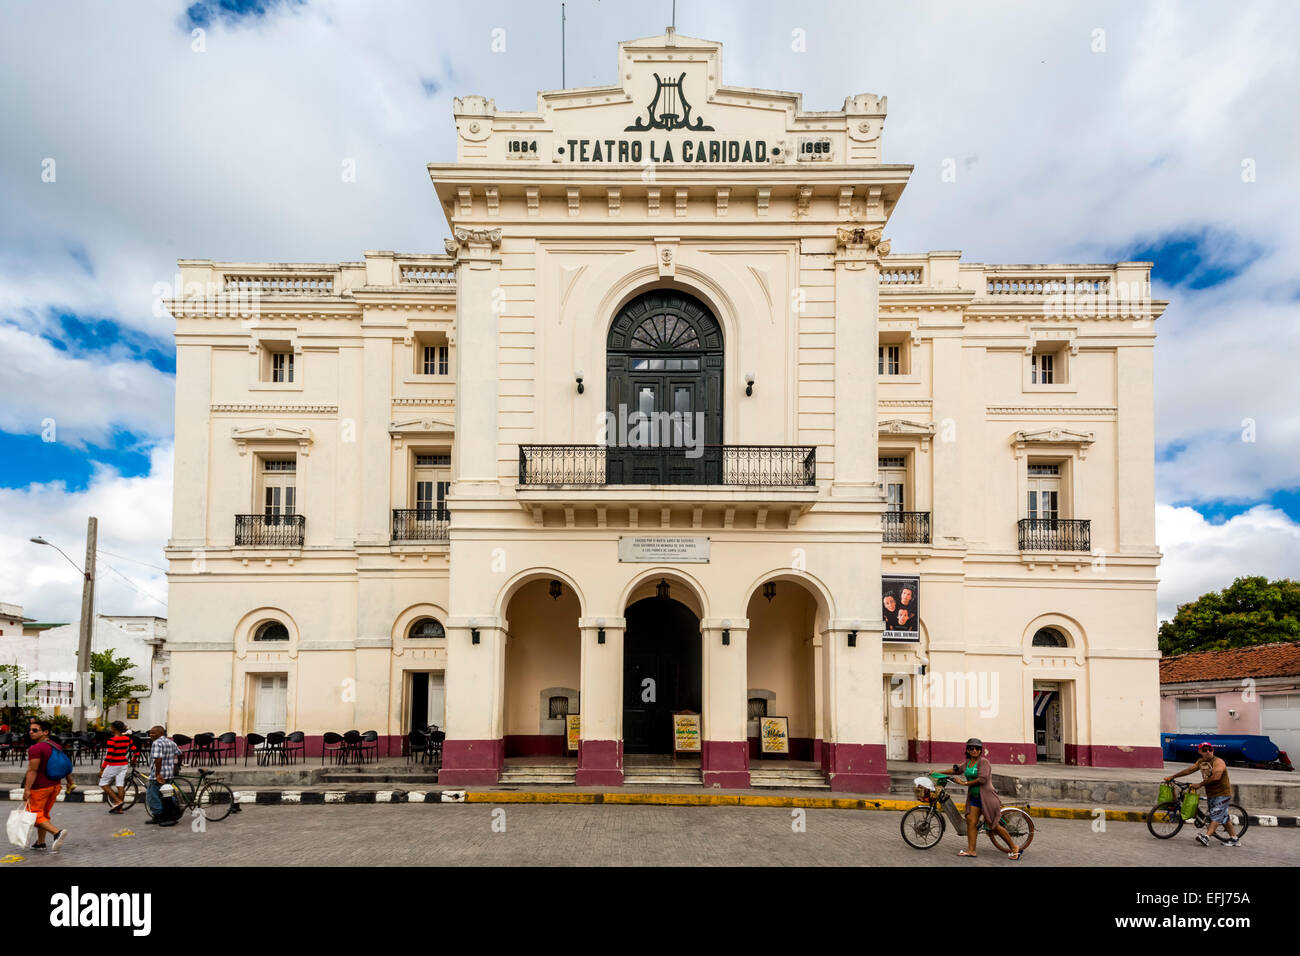 Teatro La Caridad, teatro della città, Santa Clara, Cuba Foto Stock